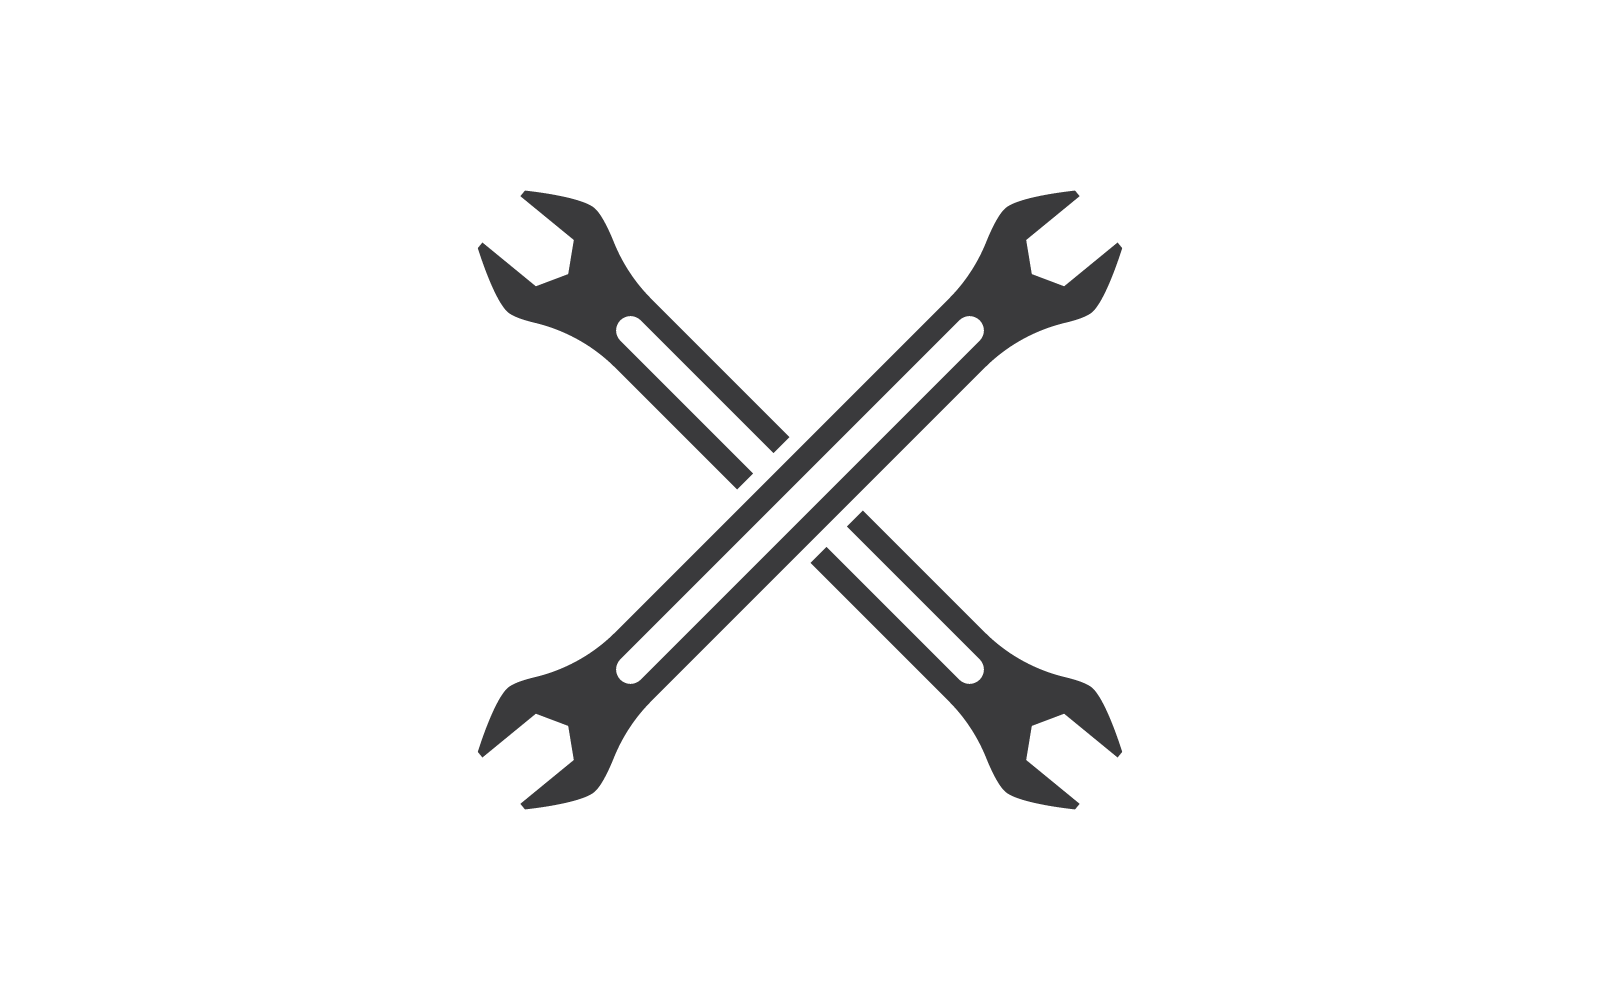 Wrench logo vector flat design template